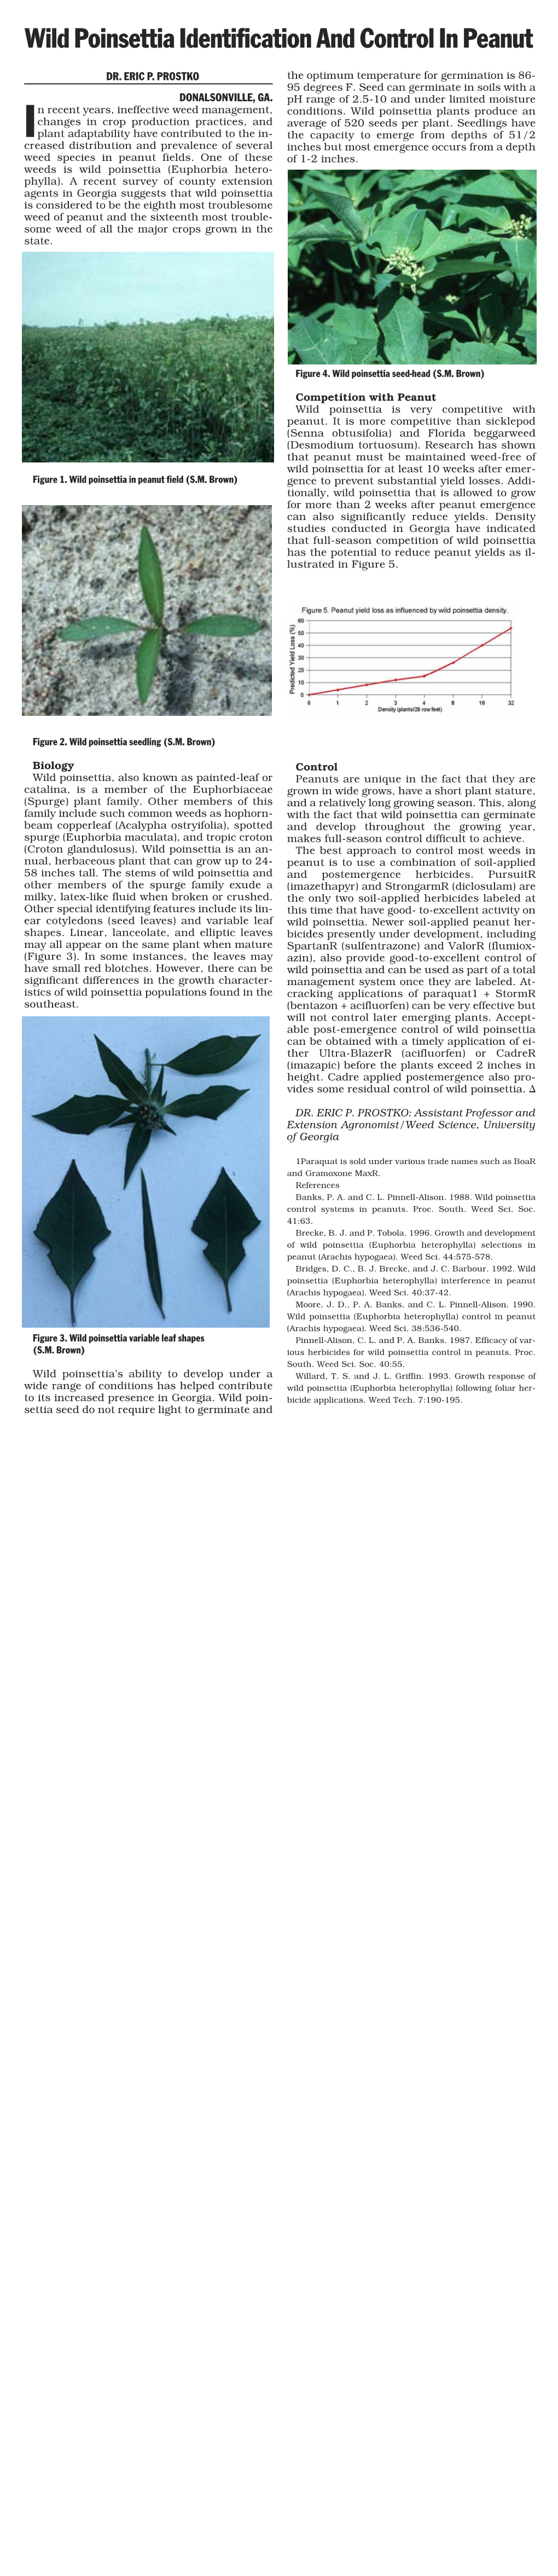 Wild Poinsettia Identification and Control in Peanut DR